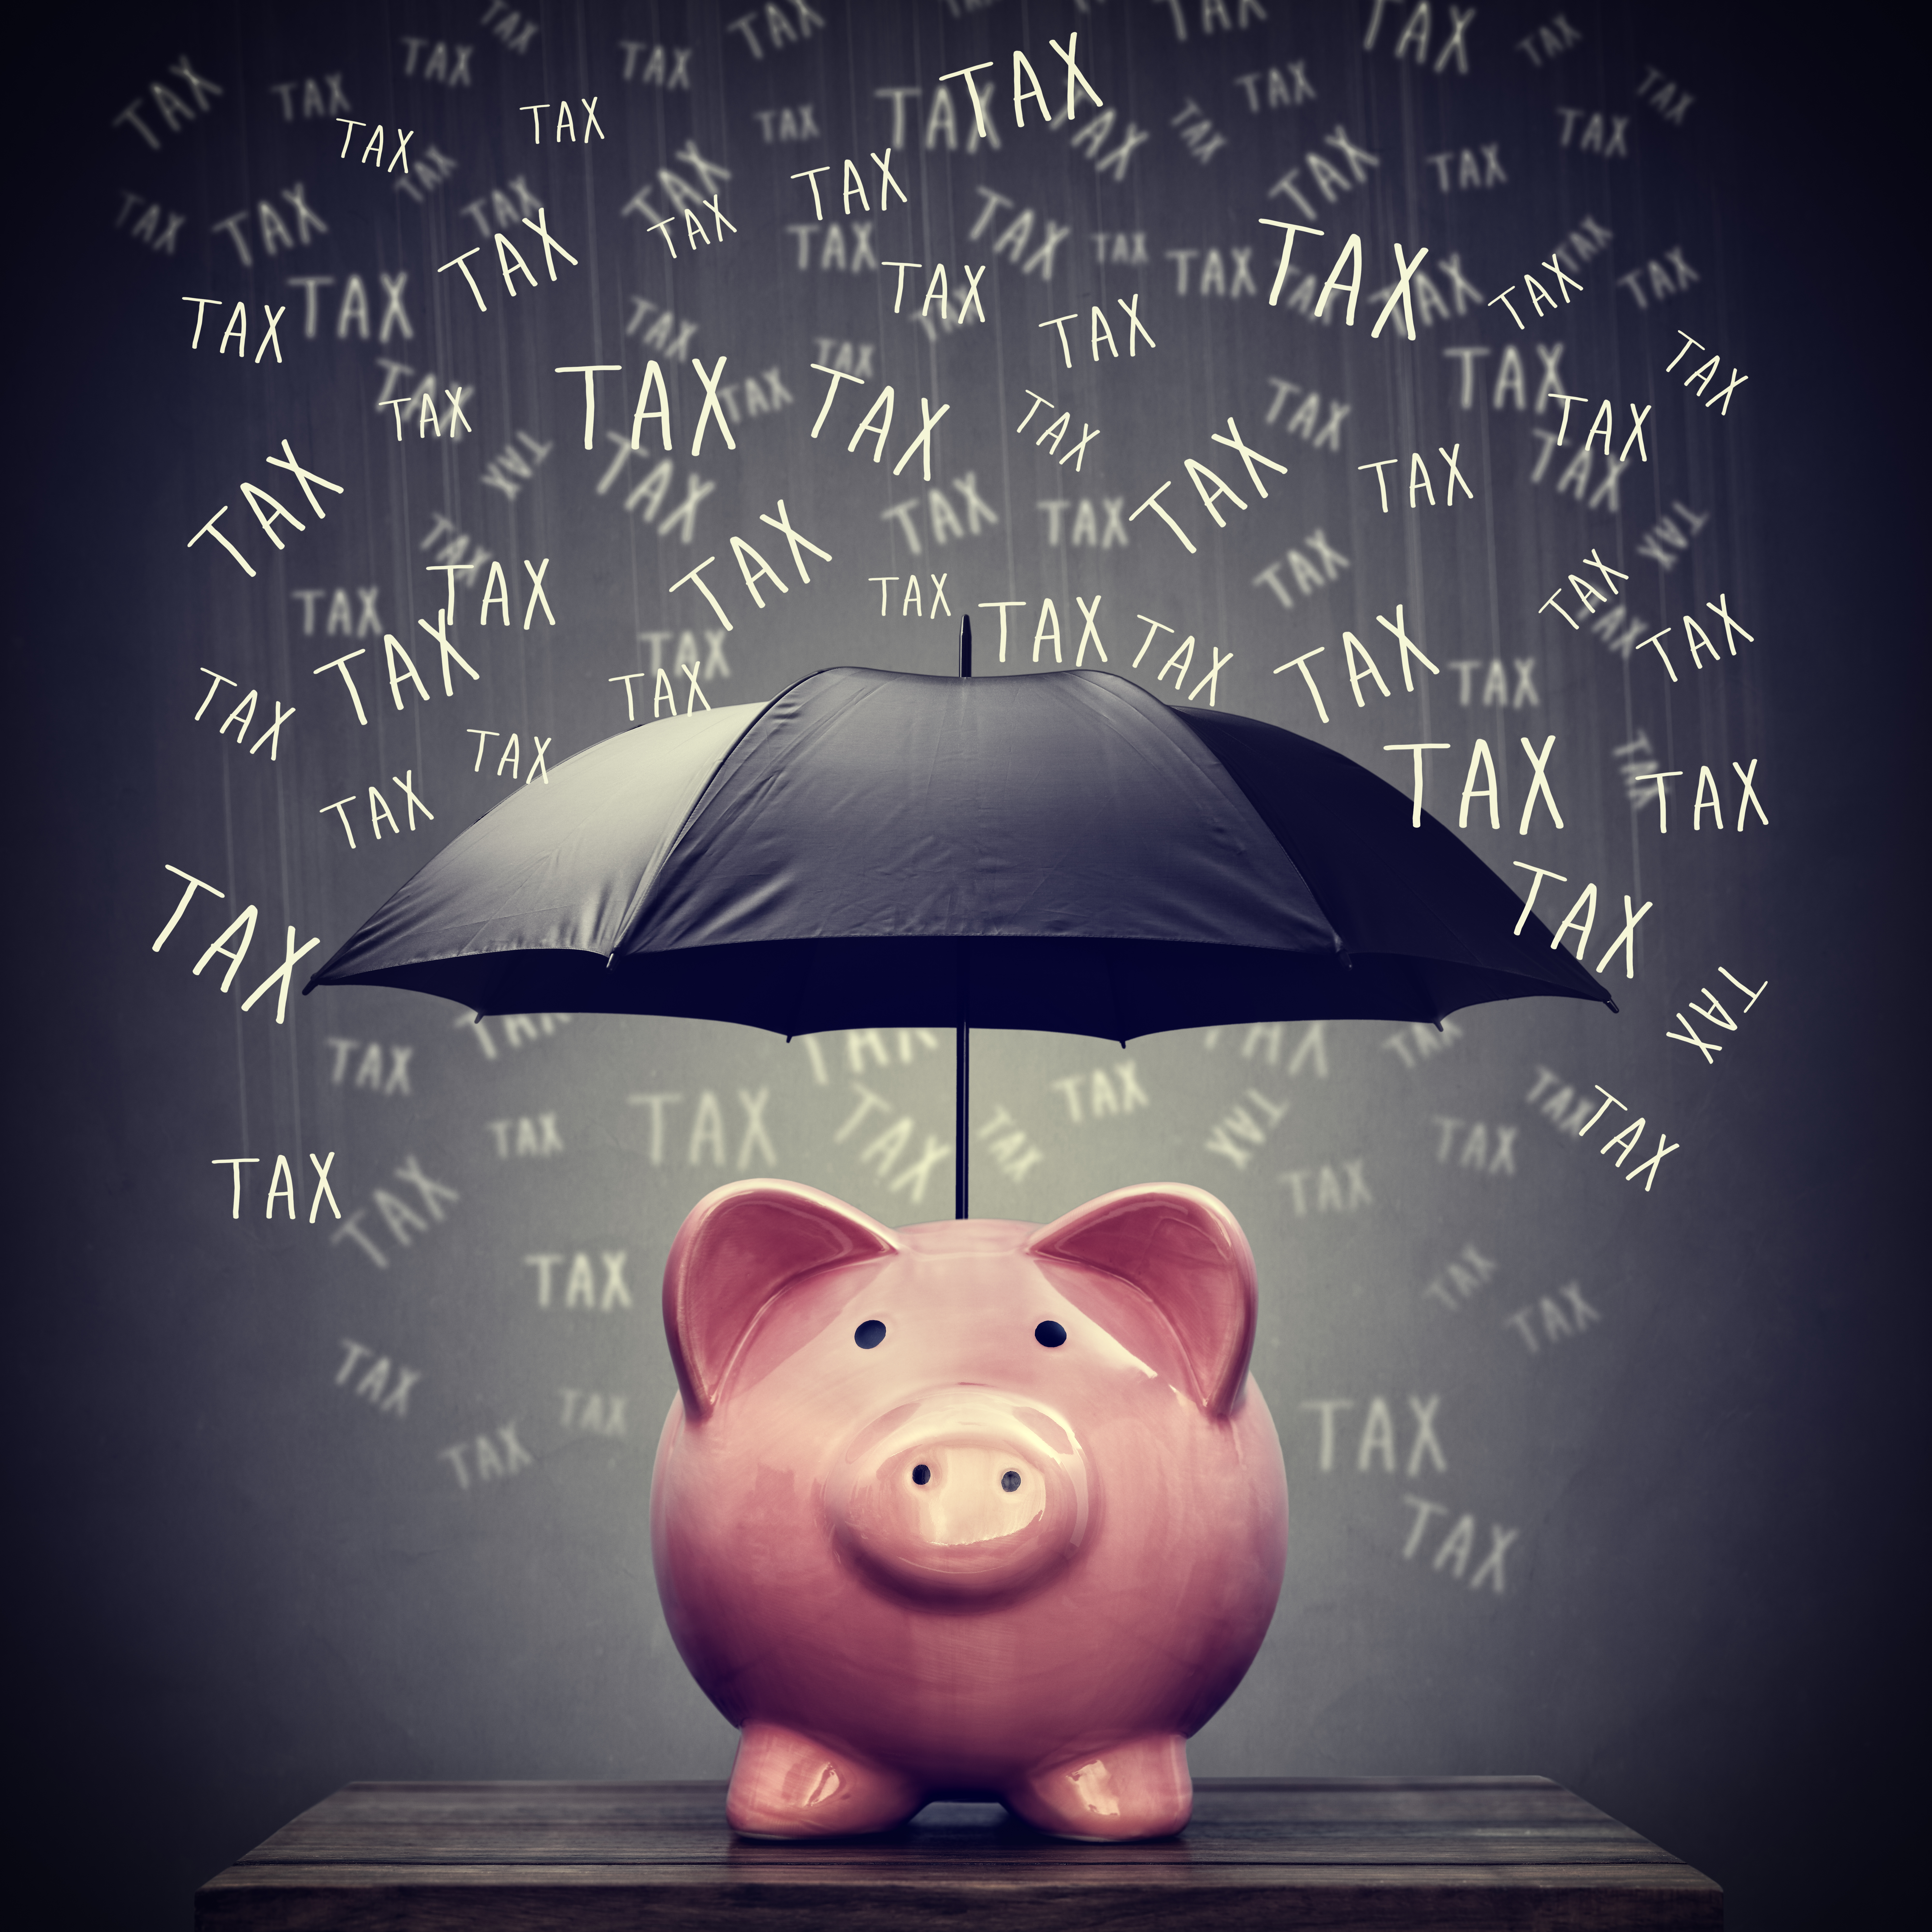 Umbrella,For,Hiding,Piggy,Bank,Savings,Account,From,Tax